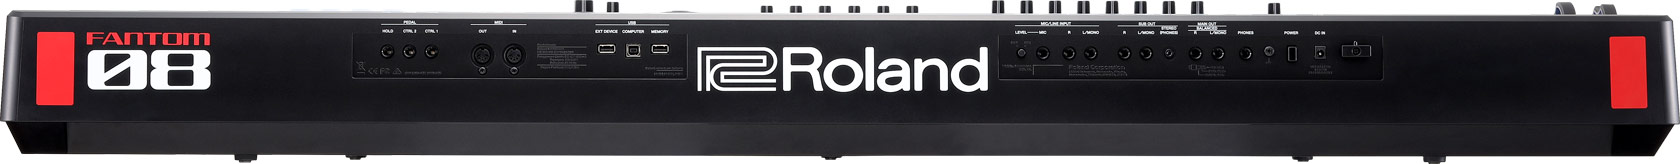 Roland FANTOM-08 Workstation Synthesizer